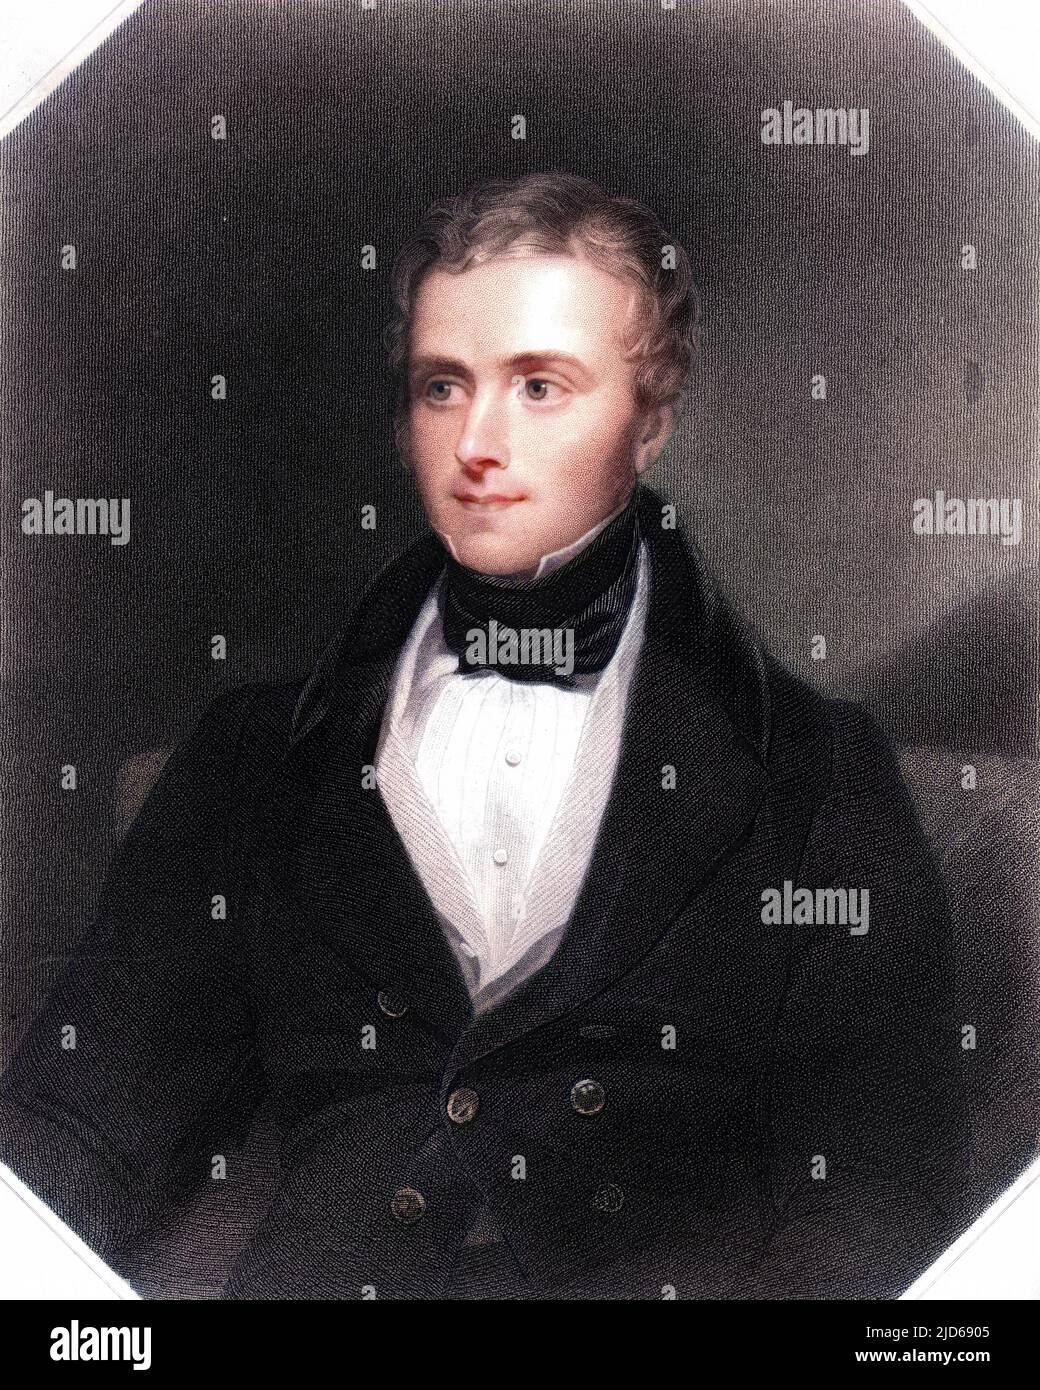 GEORGE ALEXANDER HAMILTON Irish statesman Colourised version of : 10160288       Date: 1802 - 1871 Stock Photo